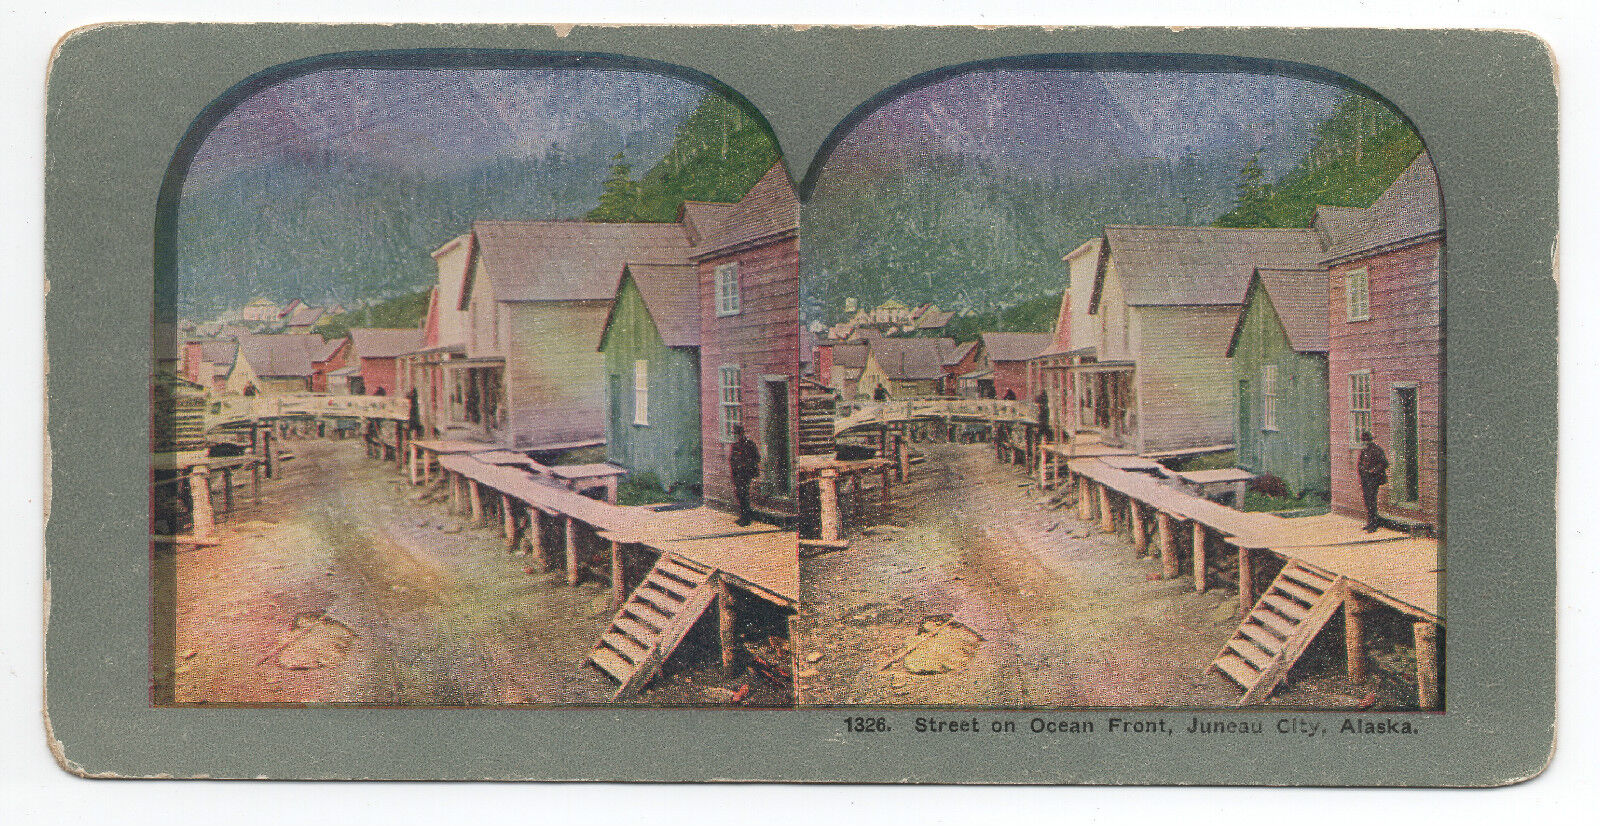 1900 Color Stereo Card of Street Scene in Juneau Alaska